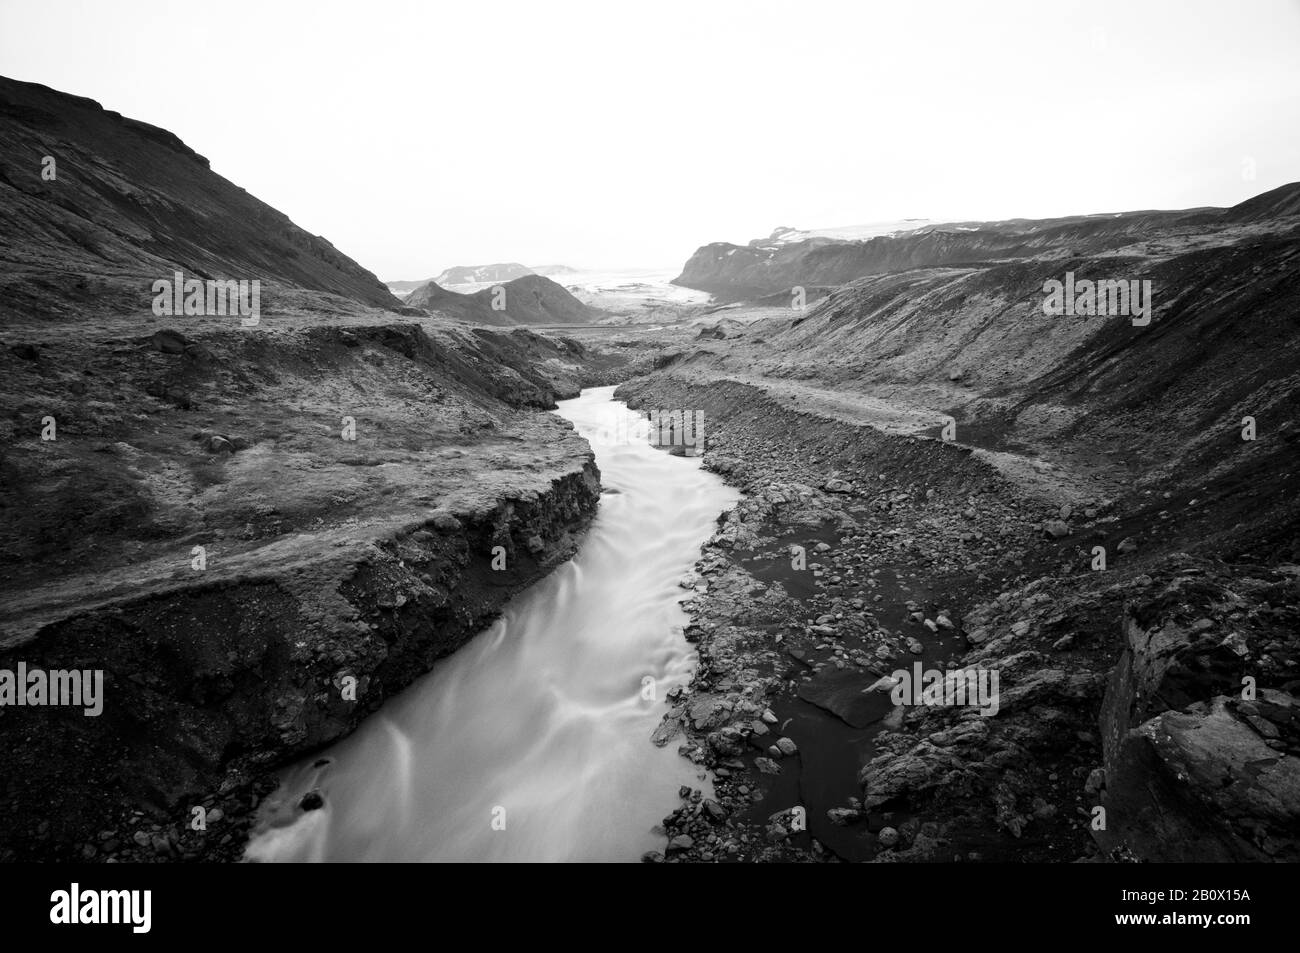 River bed in barren landscape on the way from Skogar to Landmannalaugar, Iceland, Europe, Stock Photo